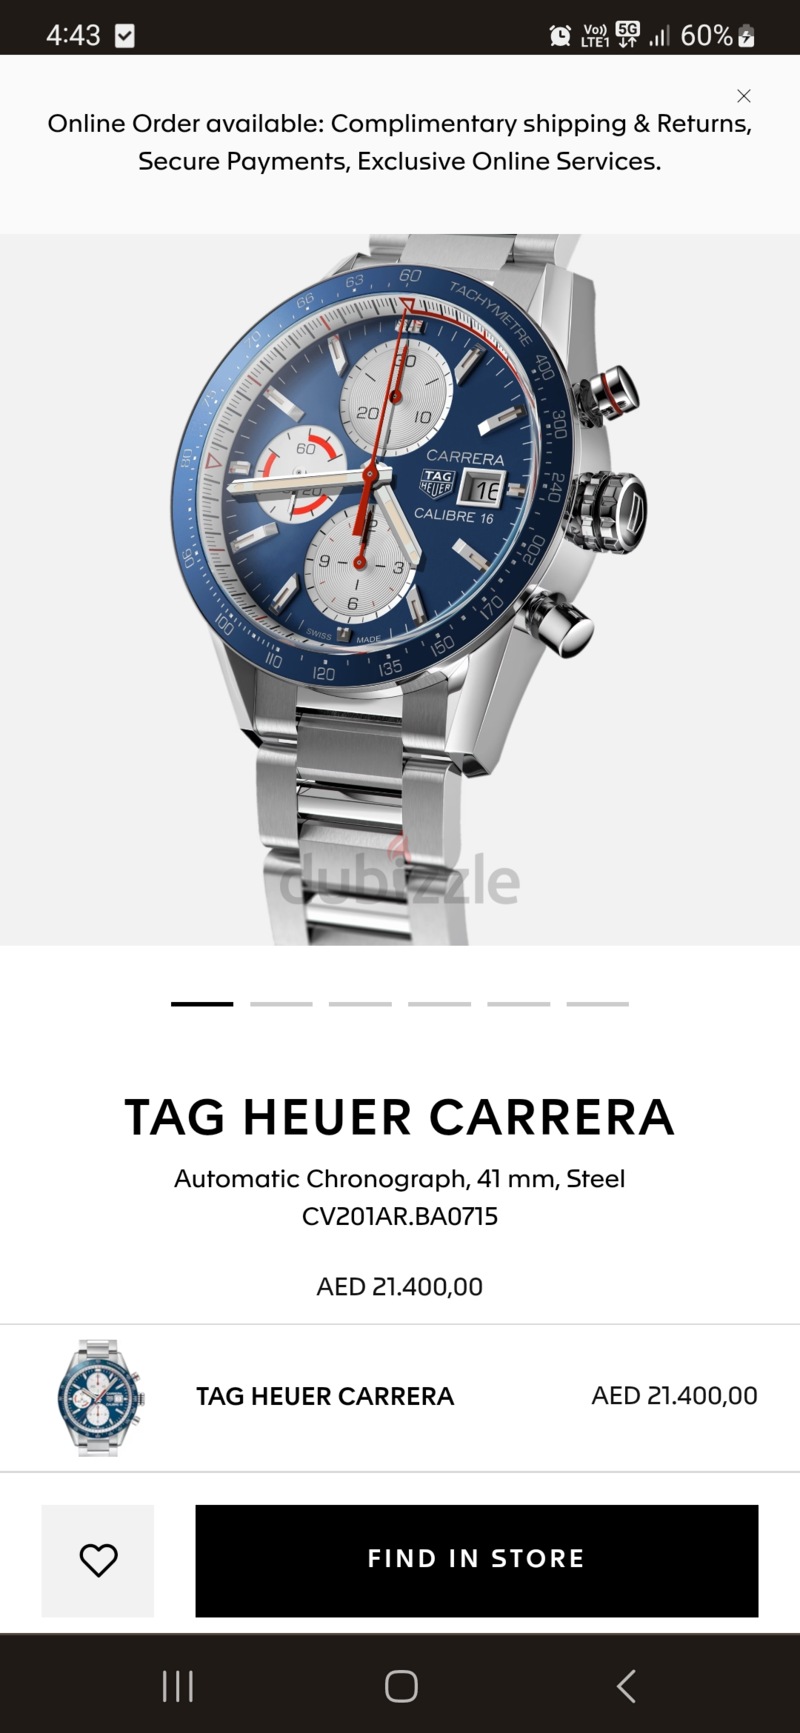 Tag Heuer Carrera Calibre 16 Chronograph Men's Watch - CV201AR.BA0715